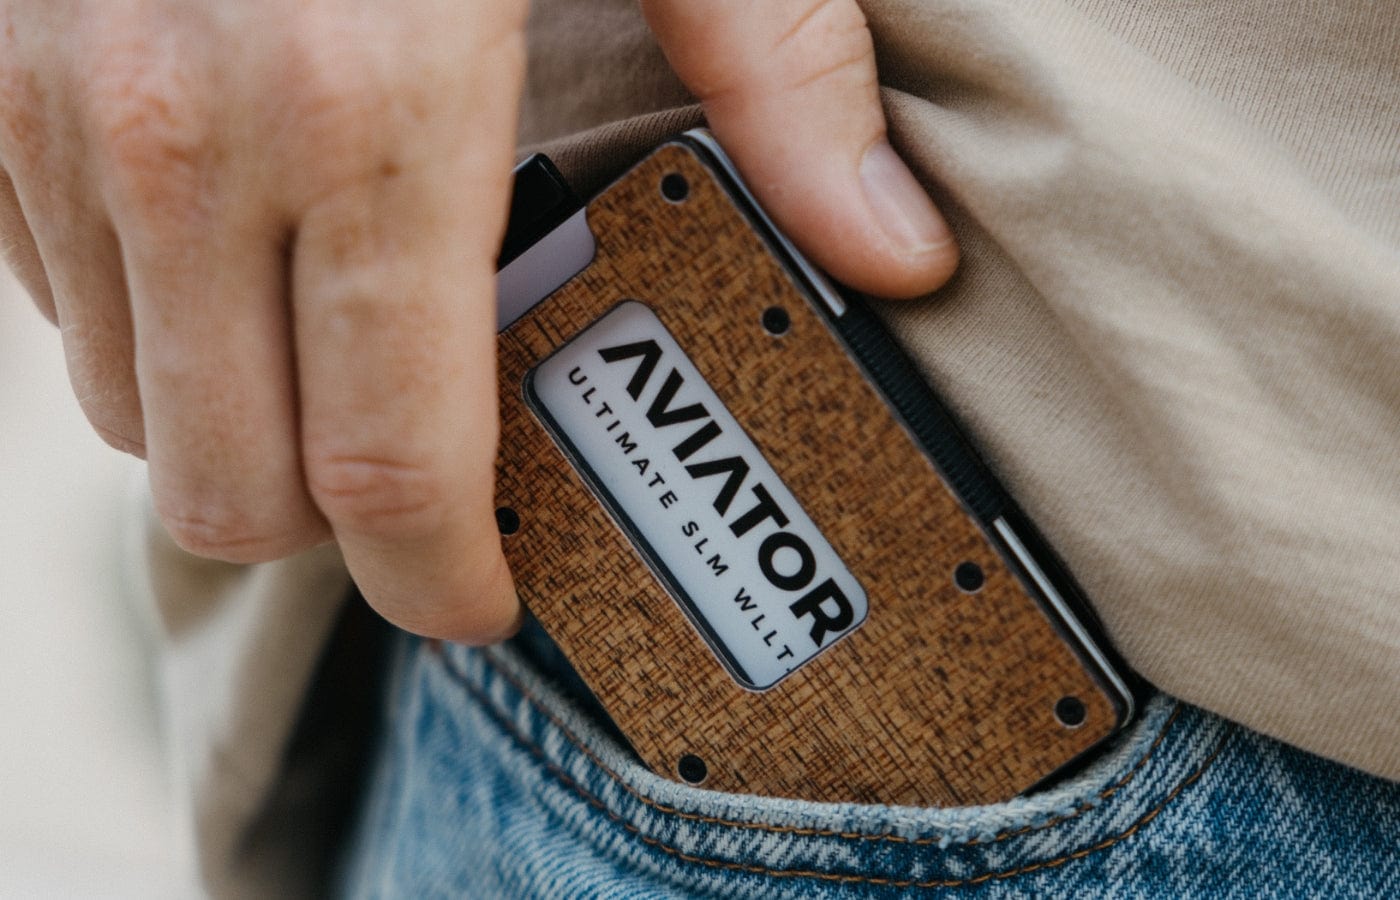 Wood Carbon Fiber Slim Wallet  #1 Slim Wallet - AVIATOR by EVERMADE WALLETS